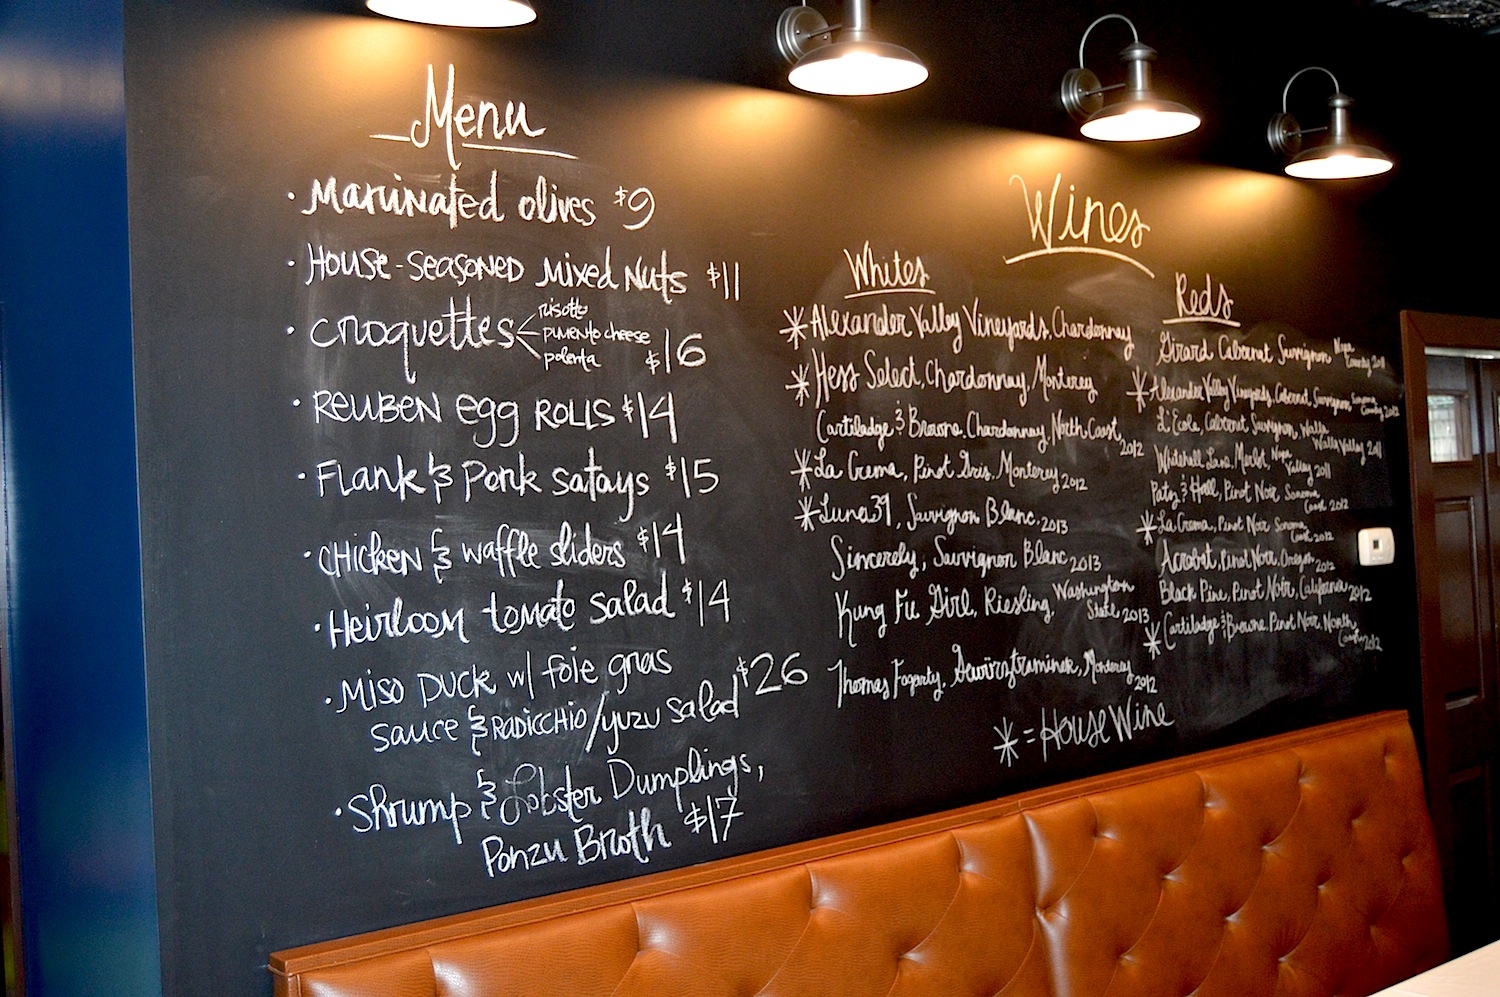 The Wine Bar's menu.